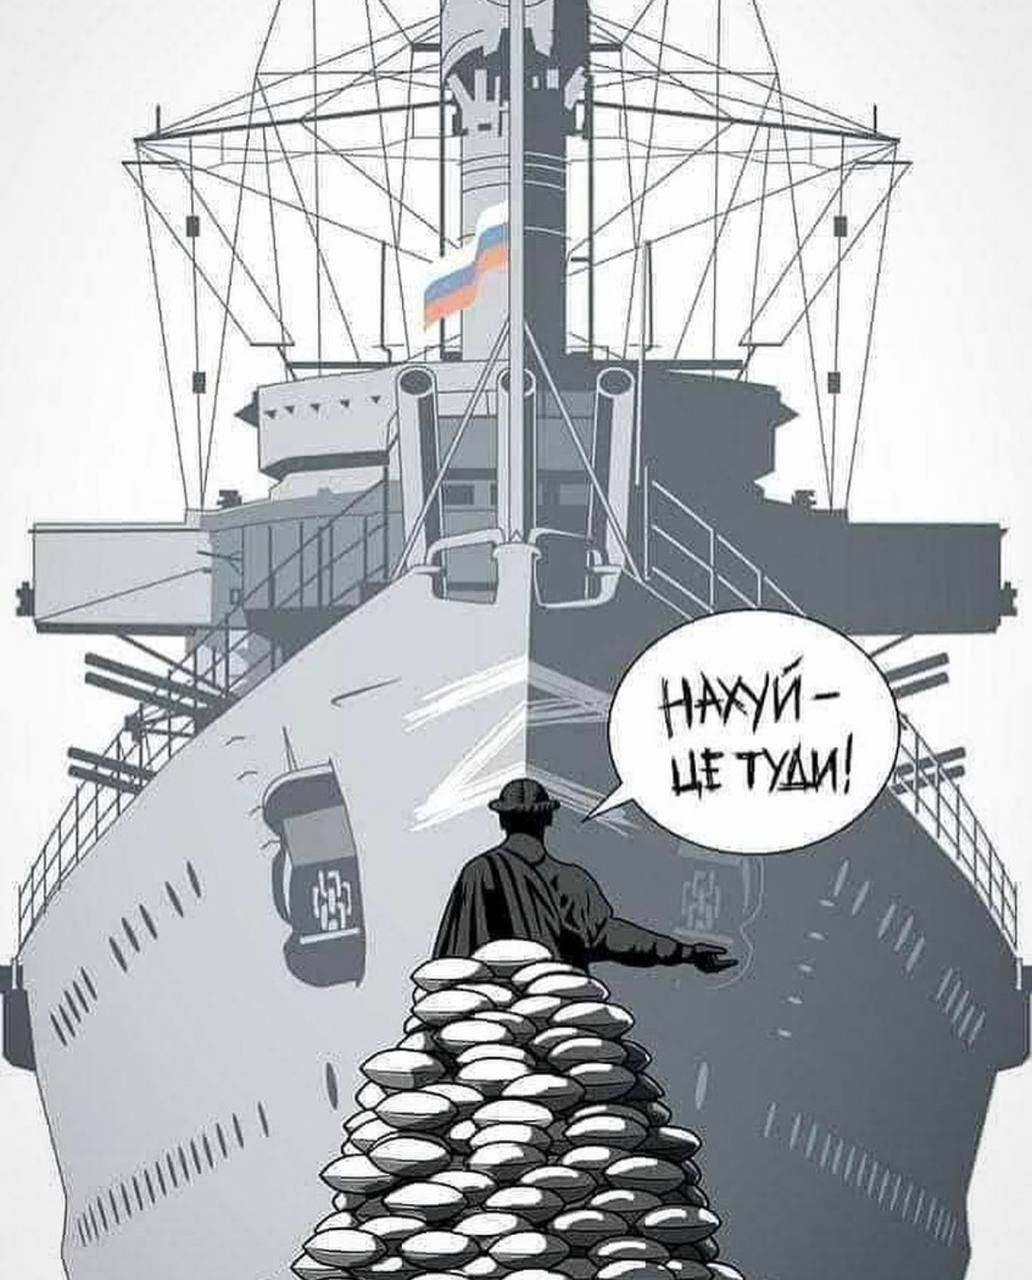 ”Москва-ква-ква”: сеть взорвали мемы об утонувшем крейсере РФ (ФОТО) - фото 3